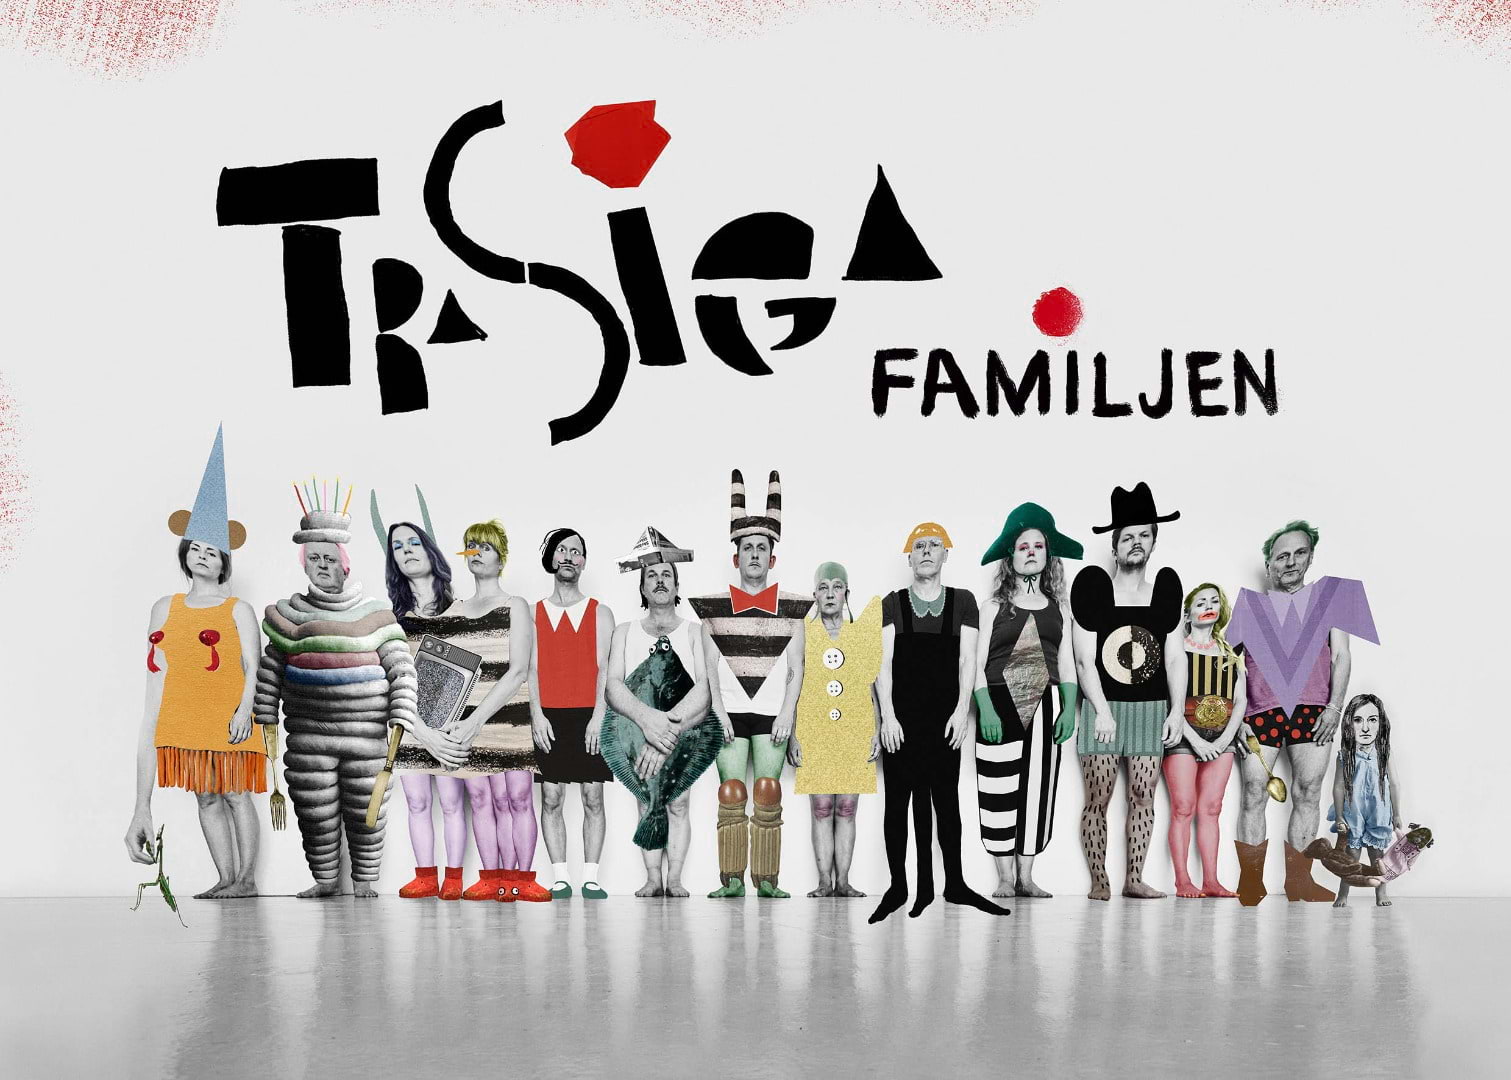 Trasiga Familjen – familjekonsert i Bagarmossen